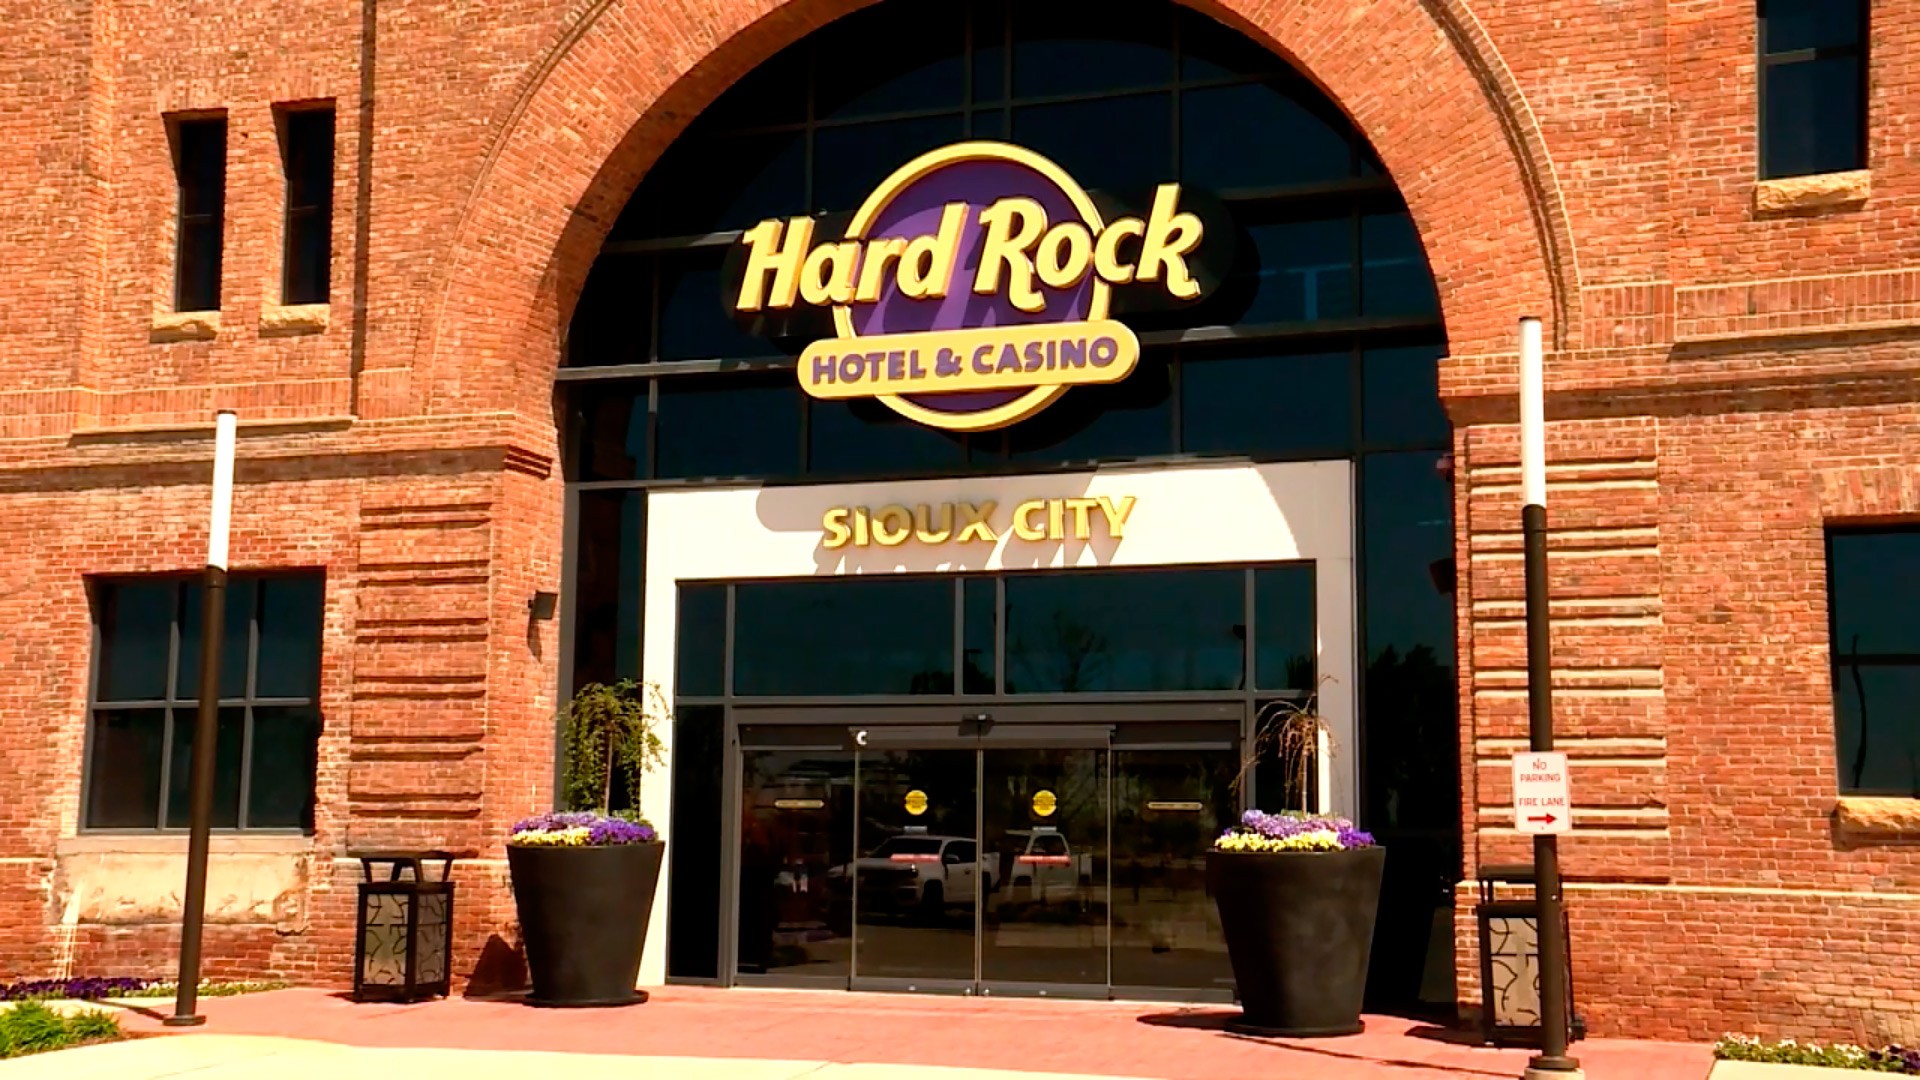 1625334724 hard rock hotel casino sioux city iowa